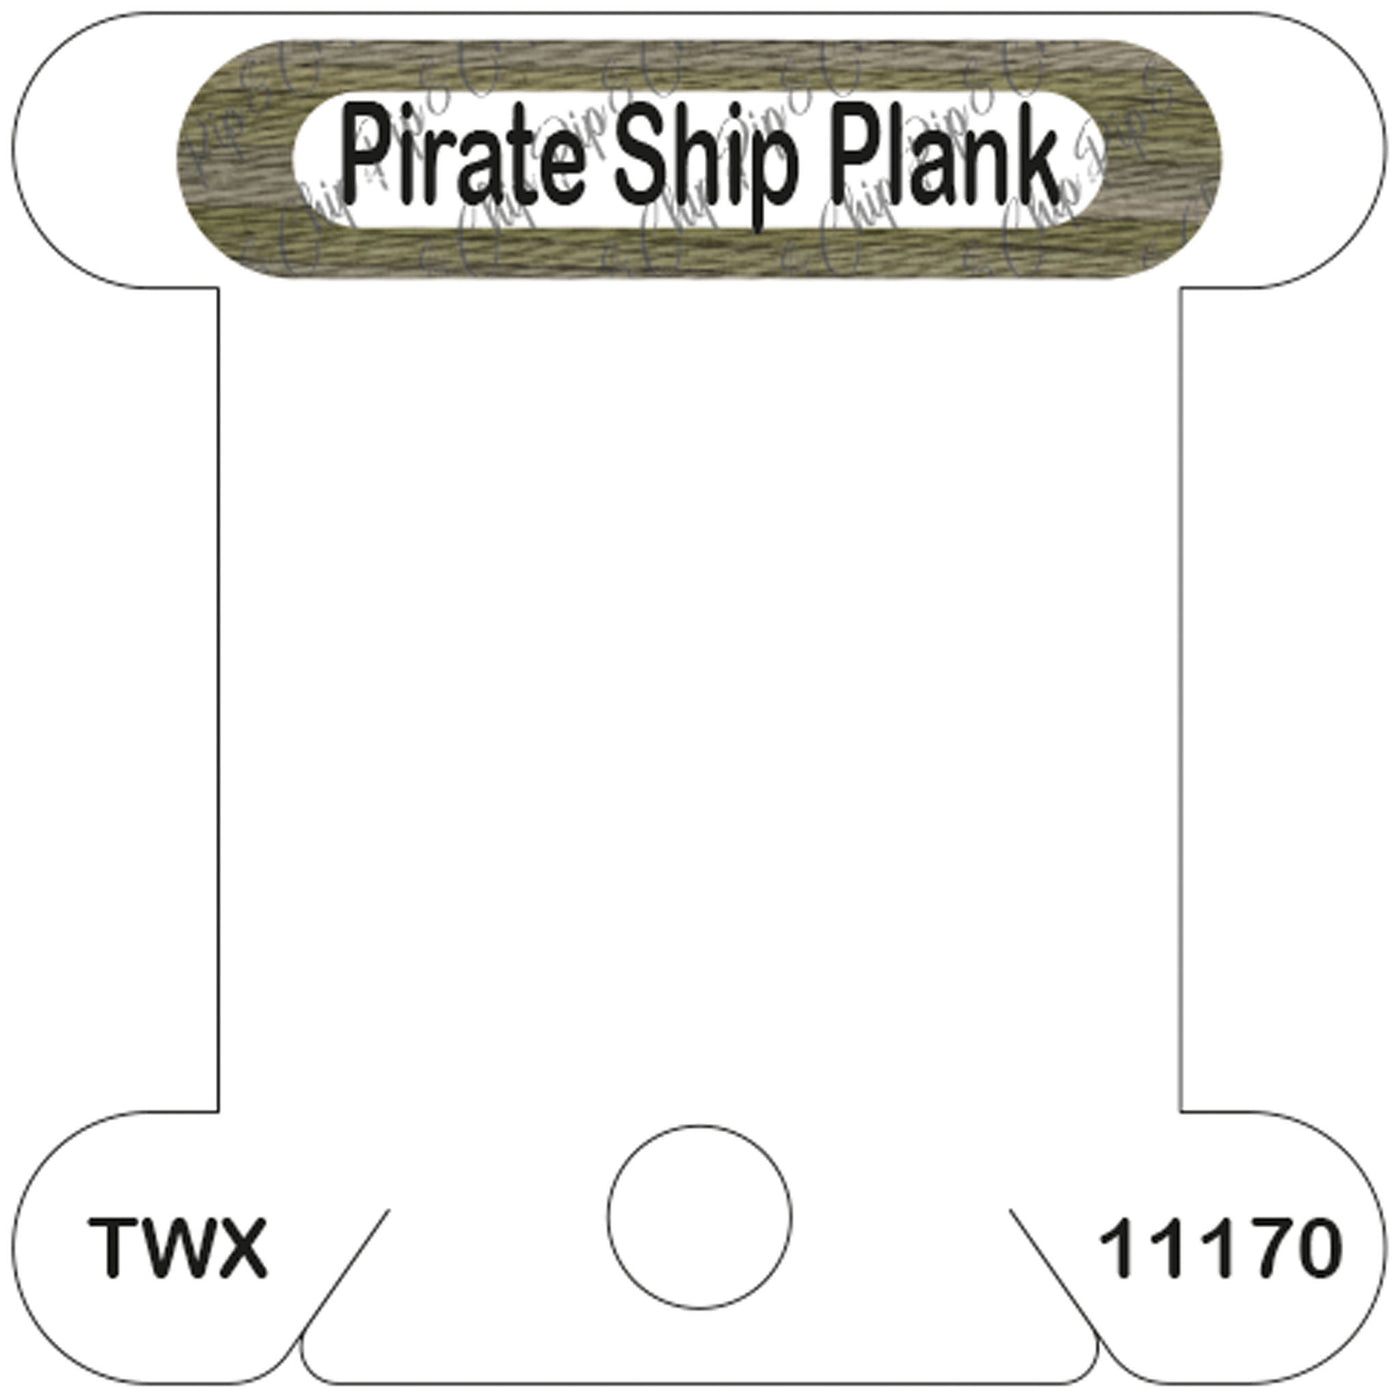 ThreadworX Pirate Ship Plank acrylic bobbin